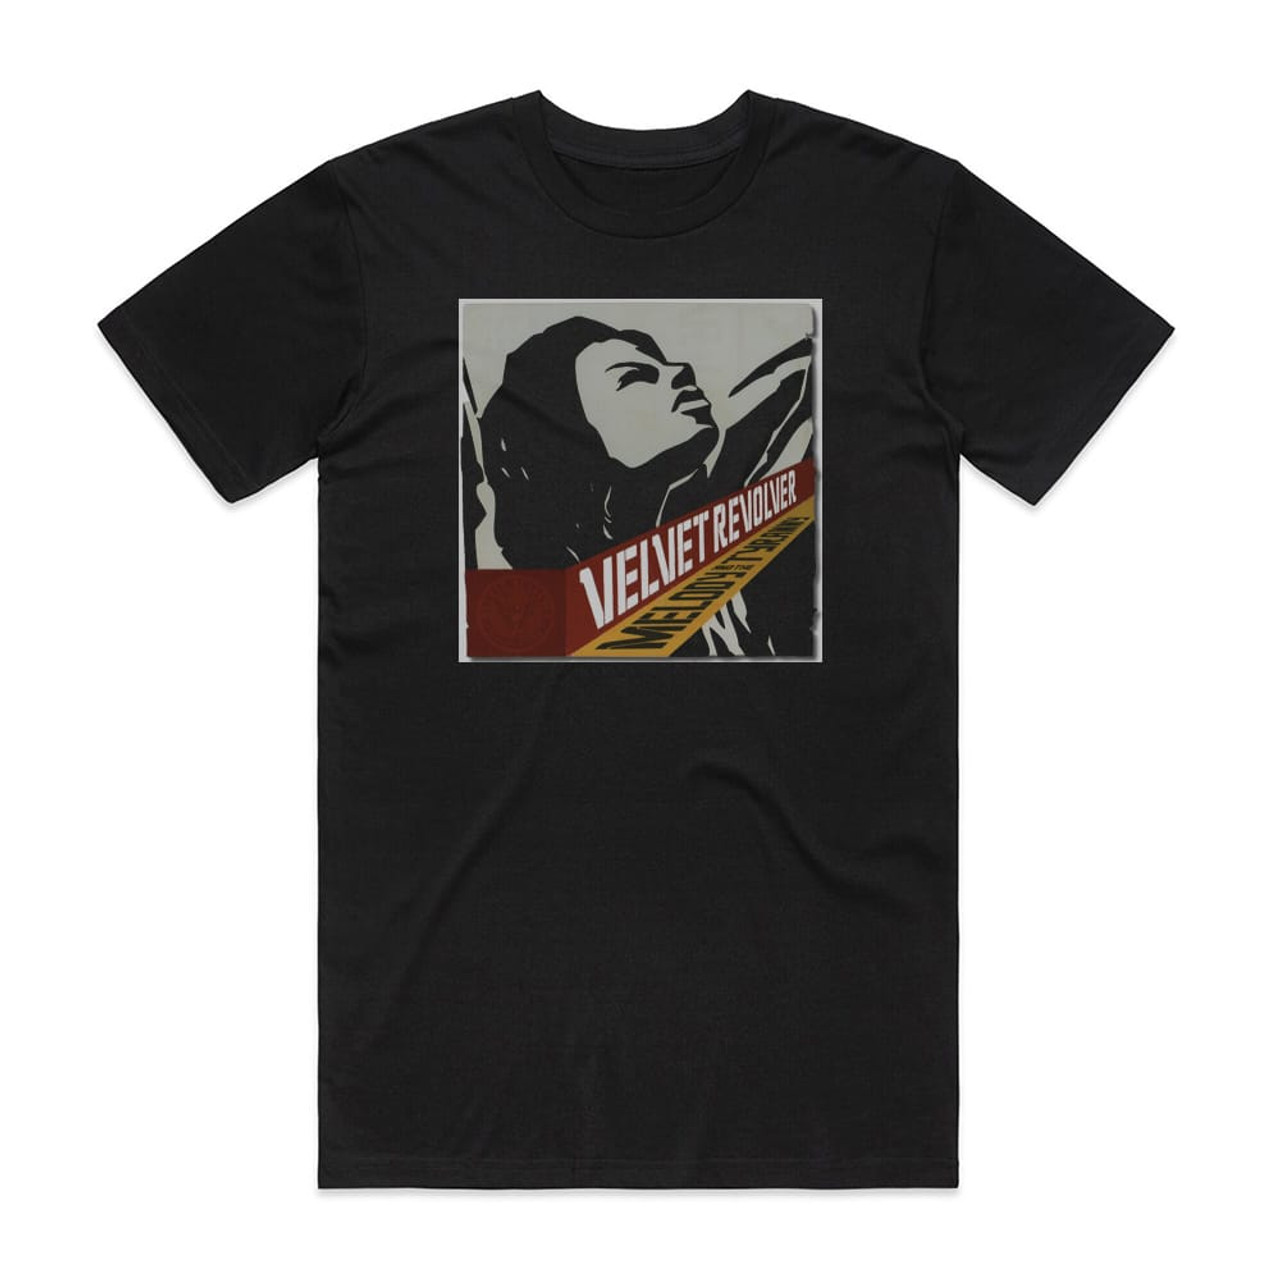 Velvet Revolver Melody And The Tyranny Album Cover T-Shirt Black